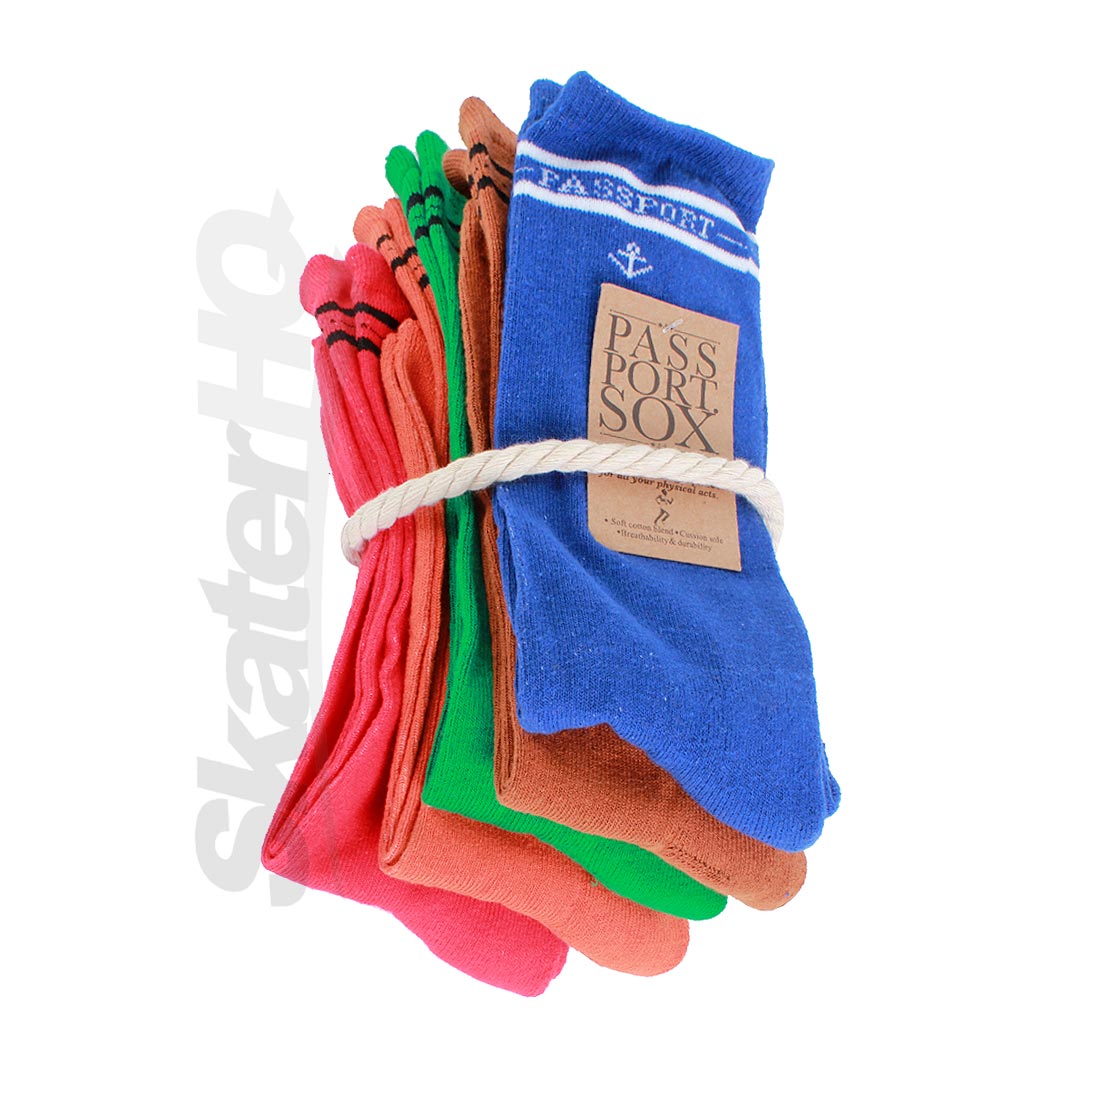 Pass Port Rainbow Serps Hi Socks 5pk Apparel Socks